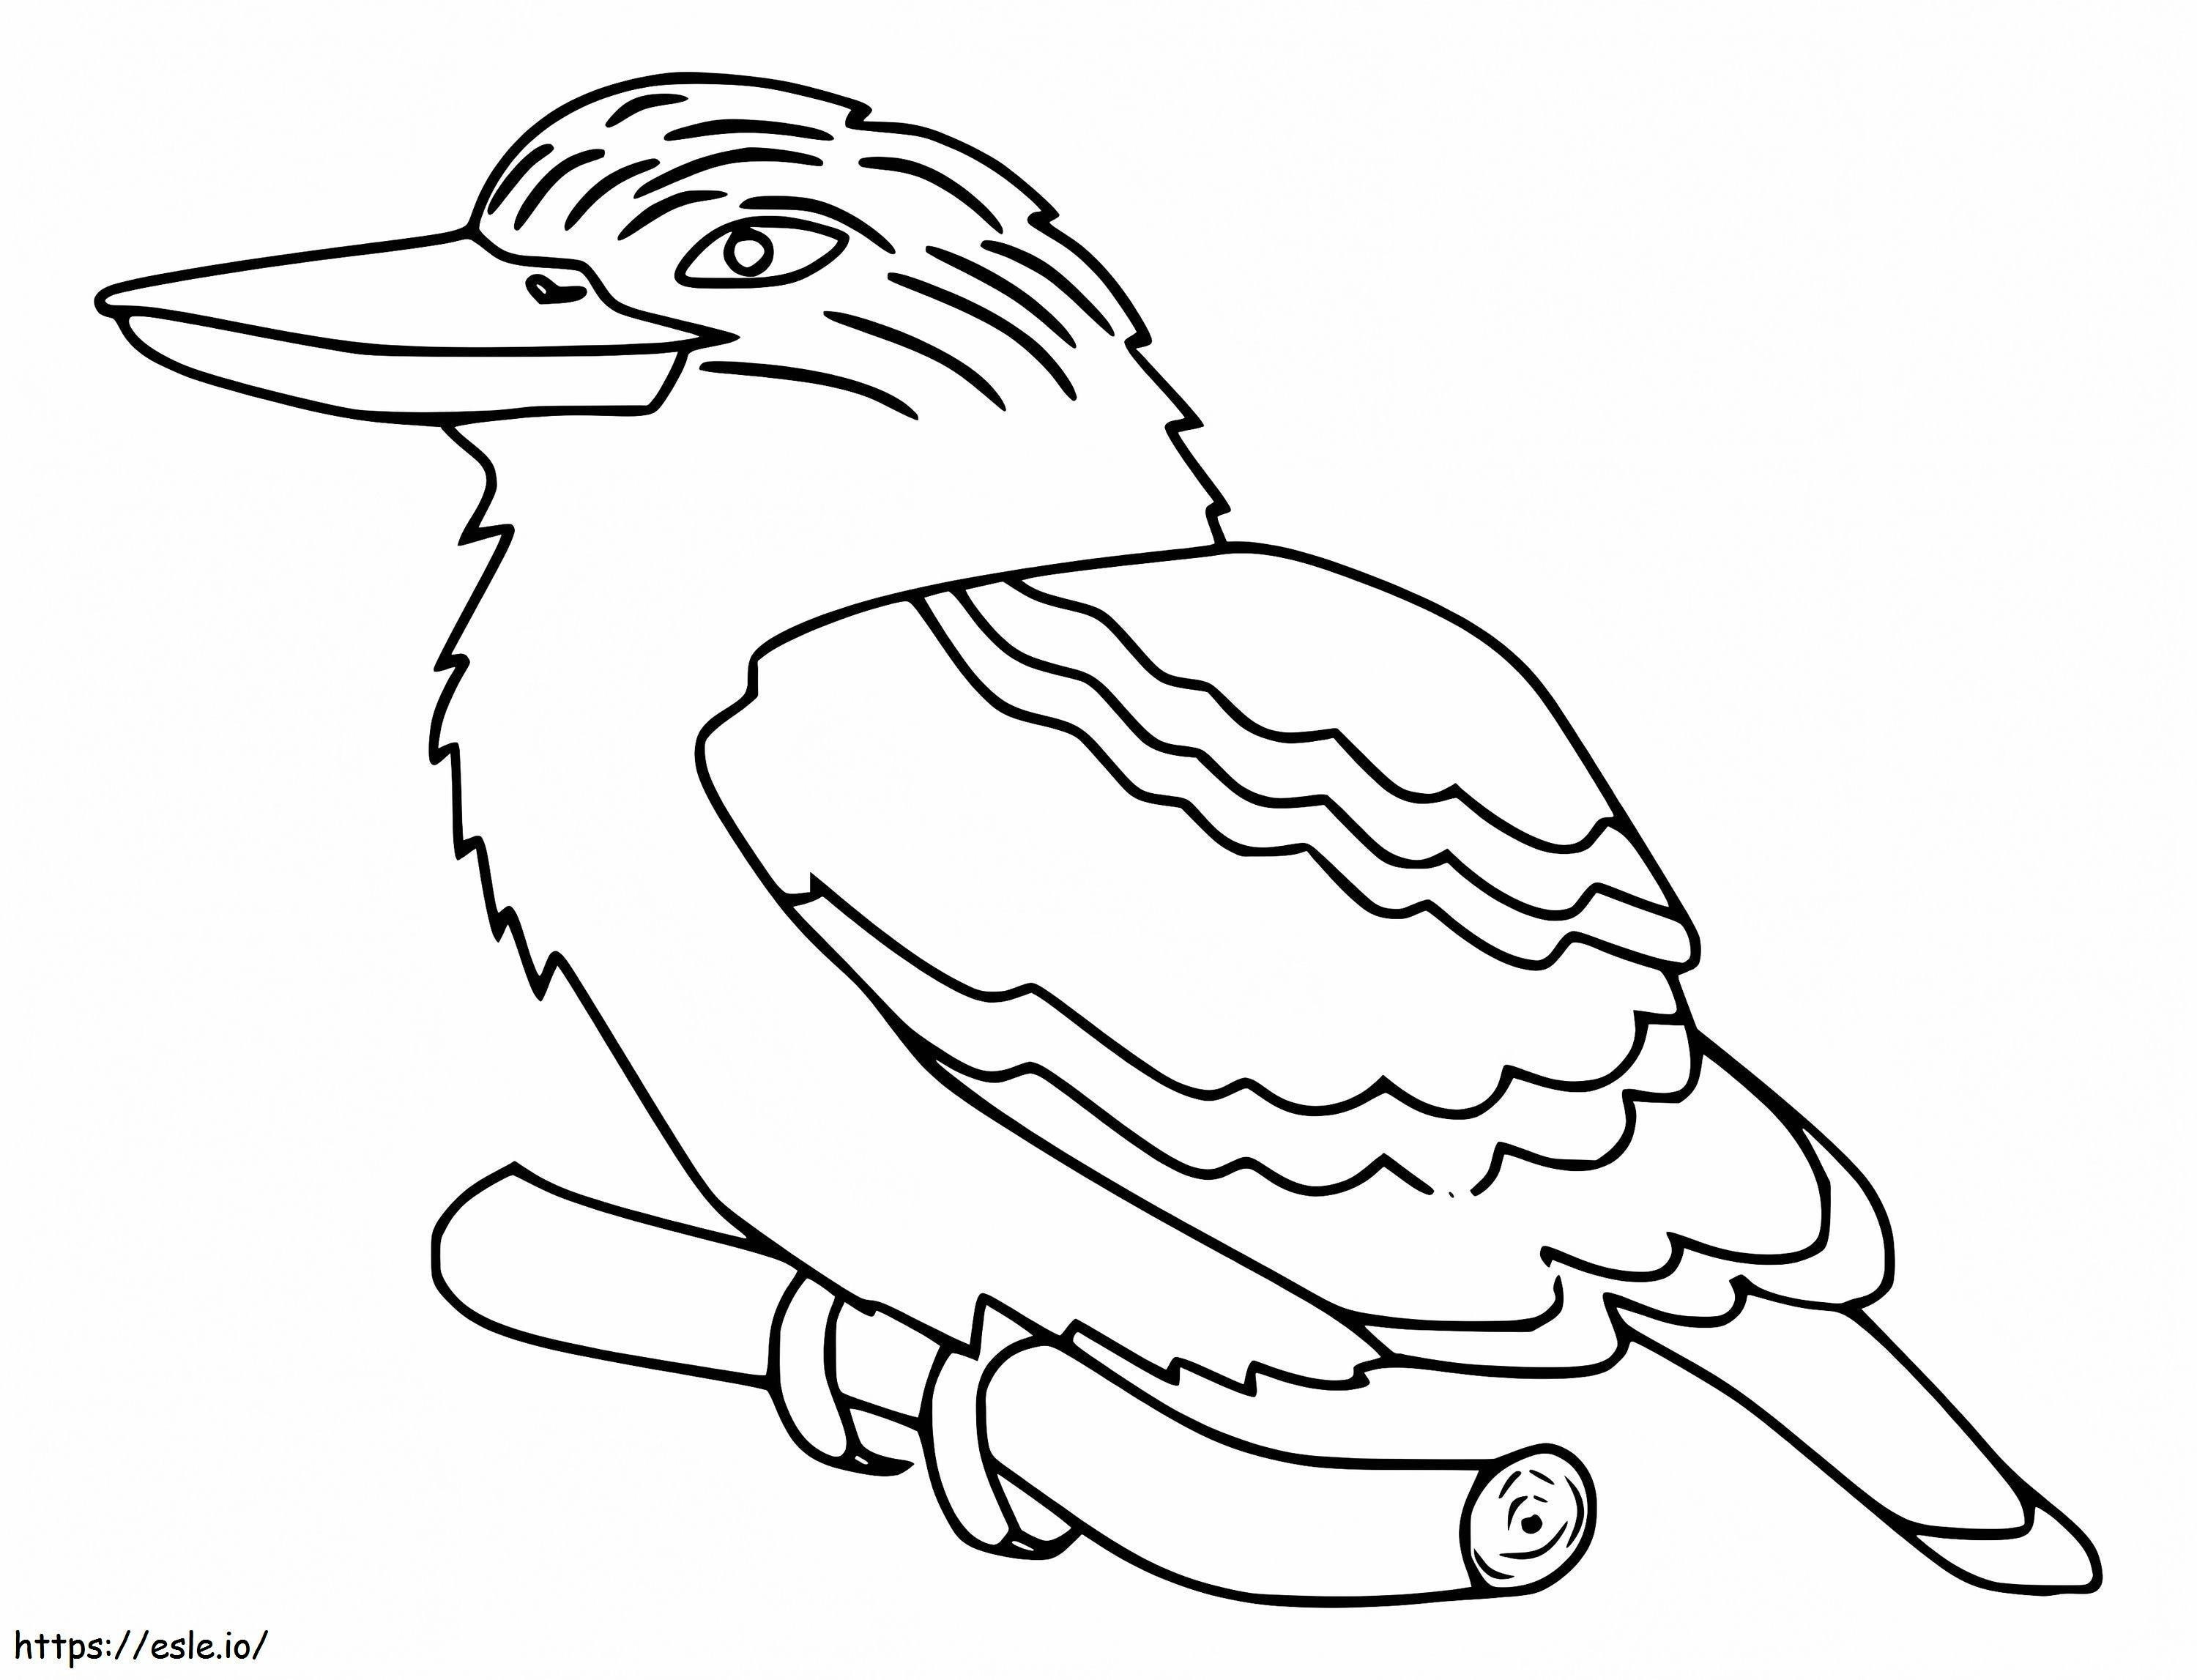 Coloriage Kookaburra imprimable gratuitement à imprimer dessin